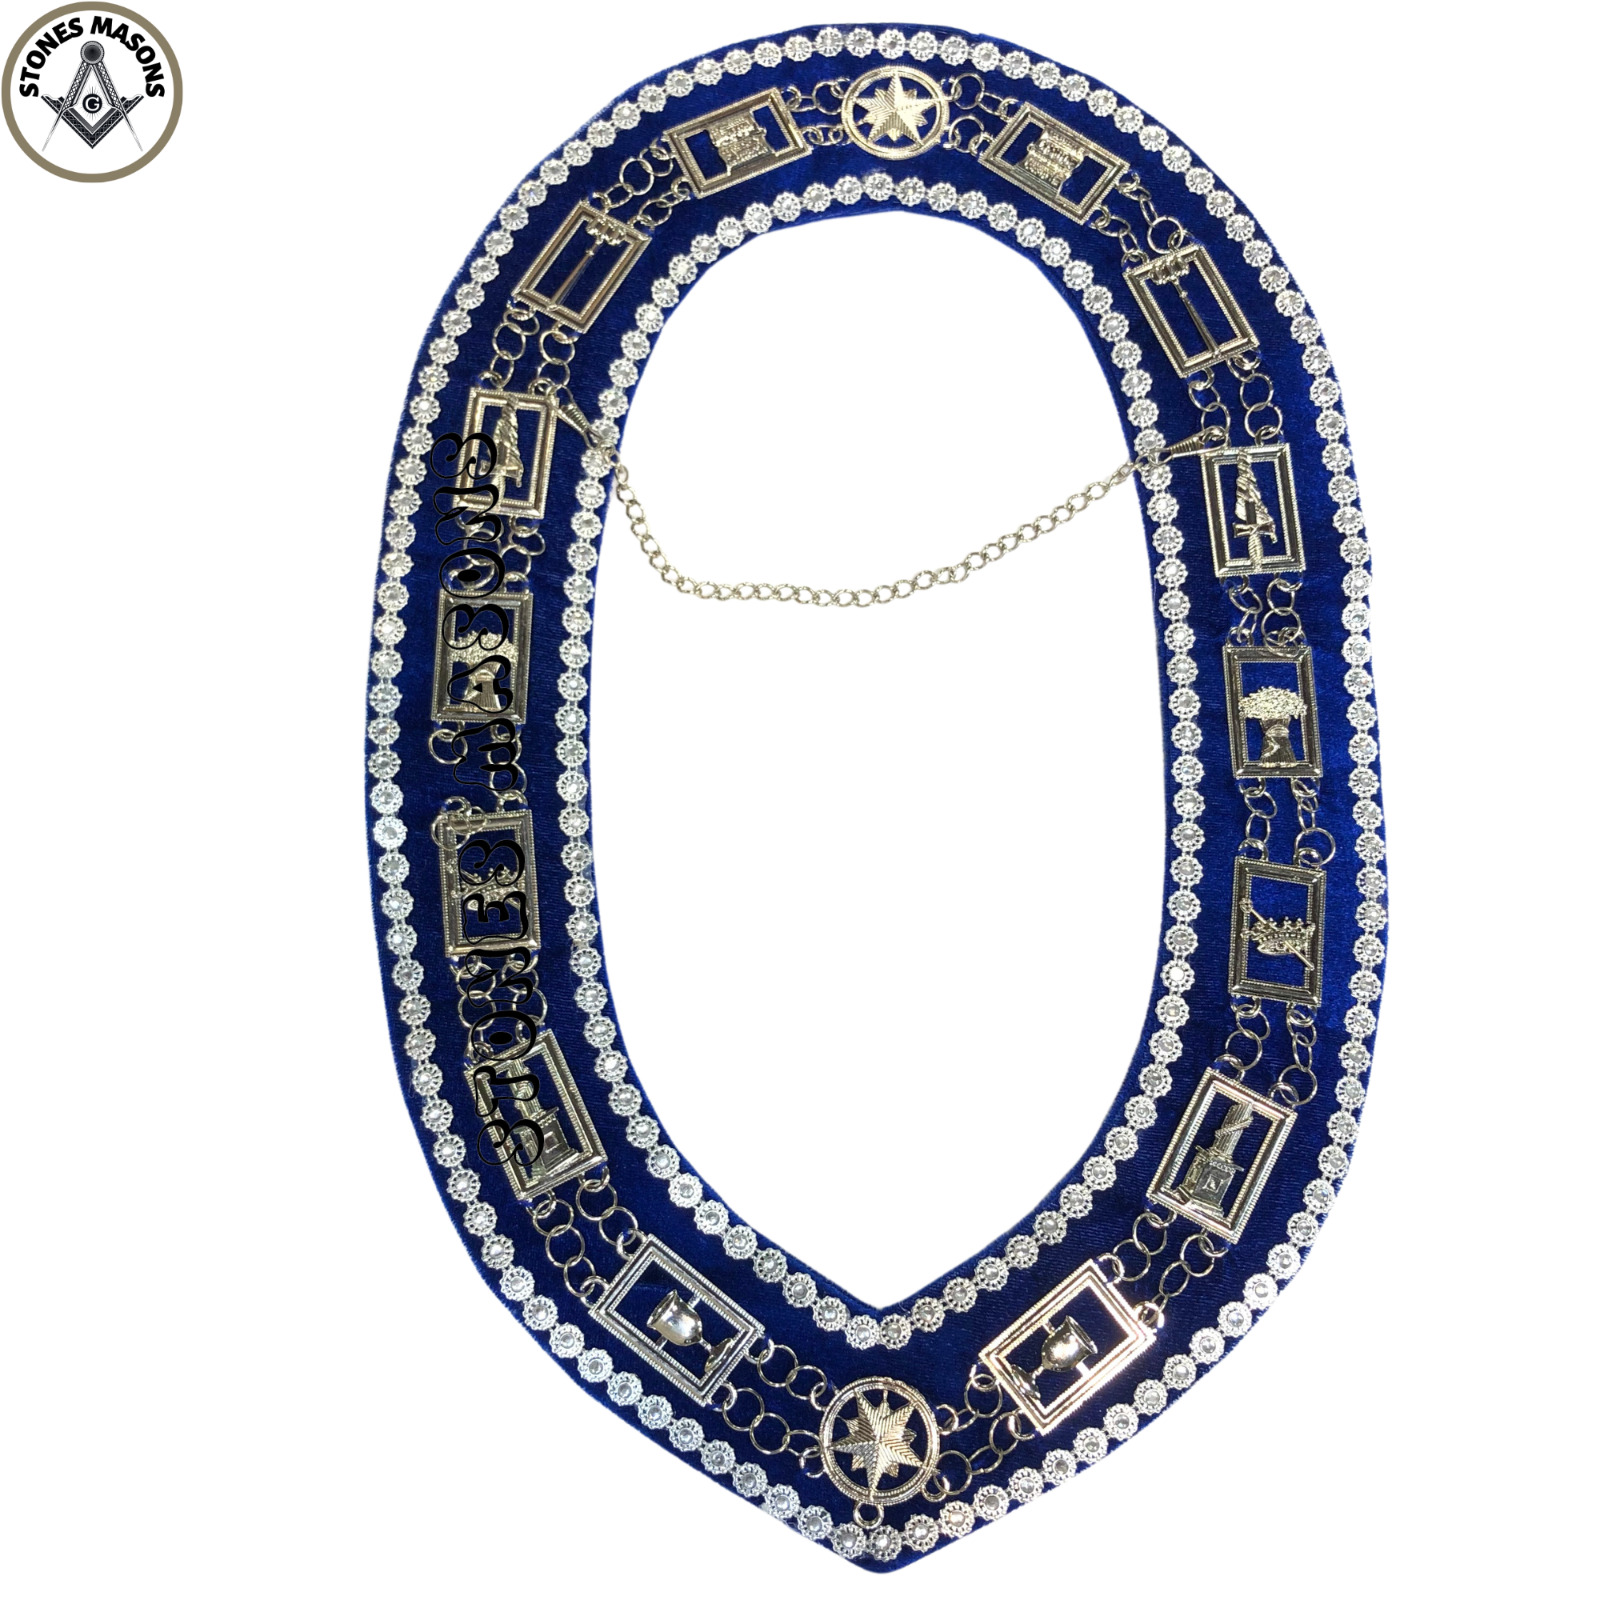 Blue Lodge Masonic Chain Collar Silver Tone Blue Velvet Backing with Rhinestone